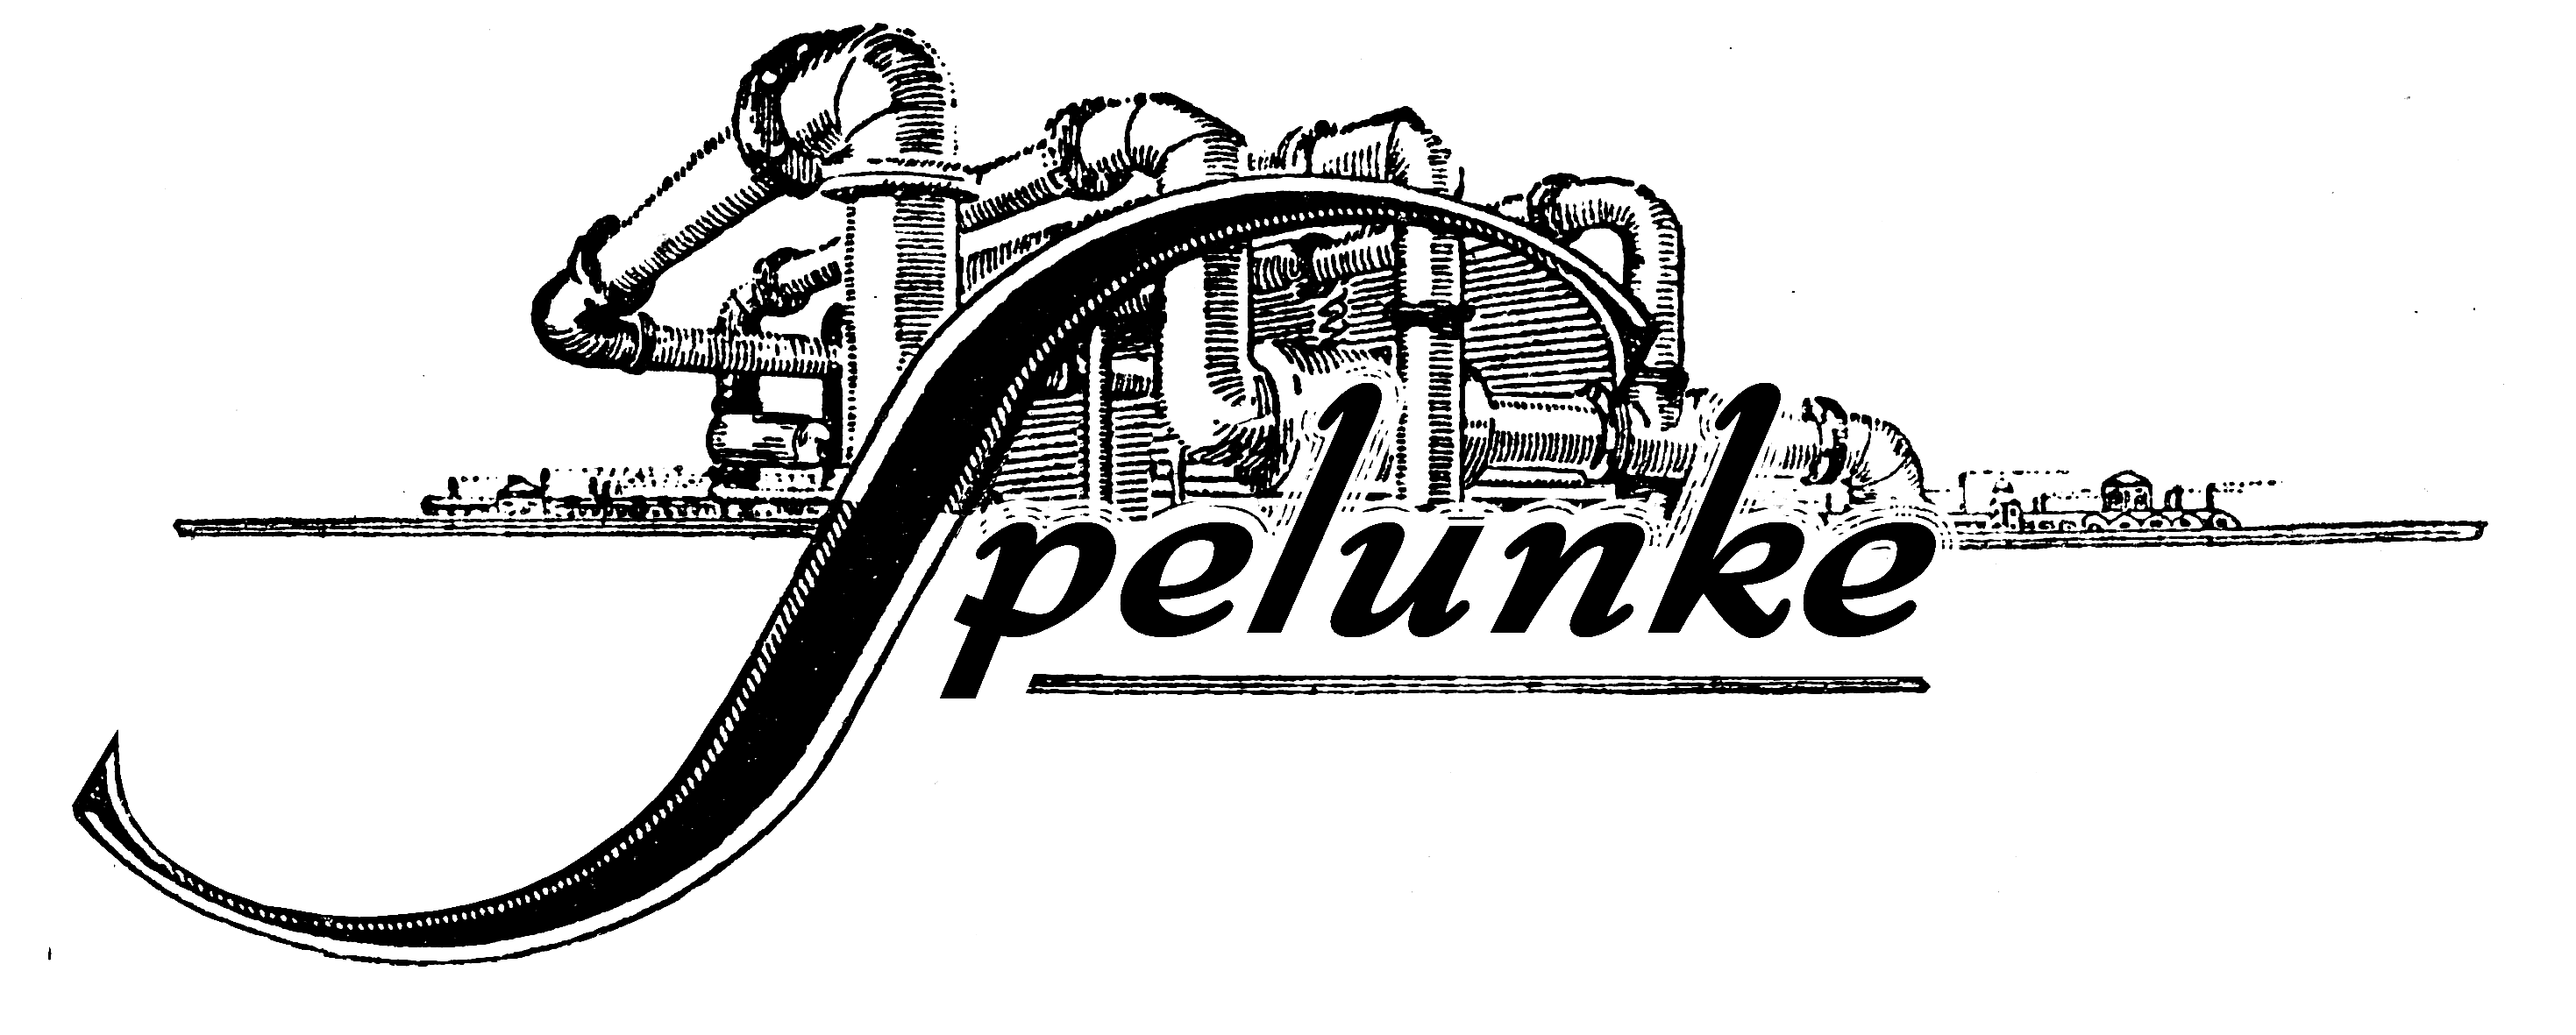 spxlxnkx logo